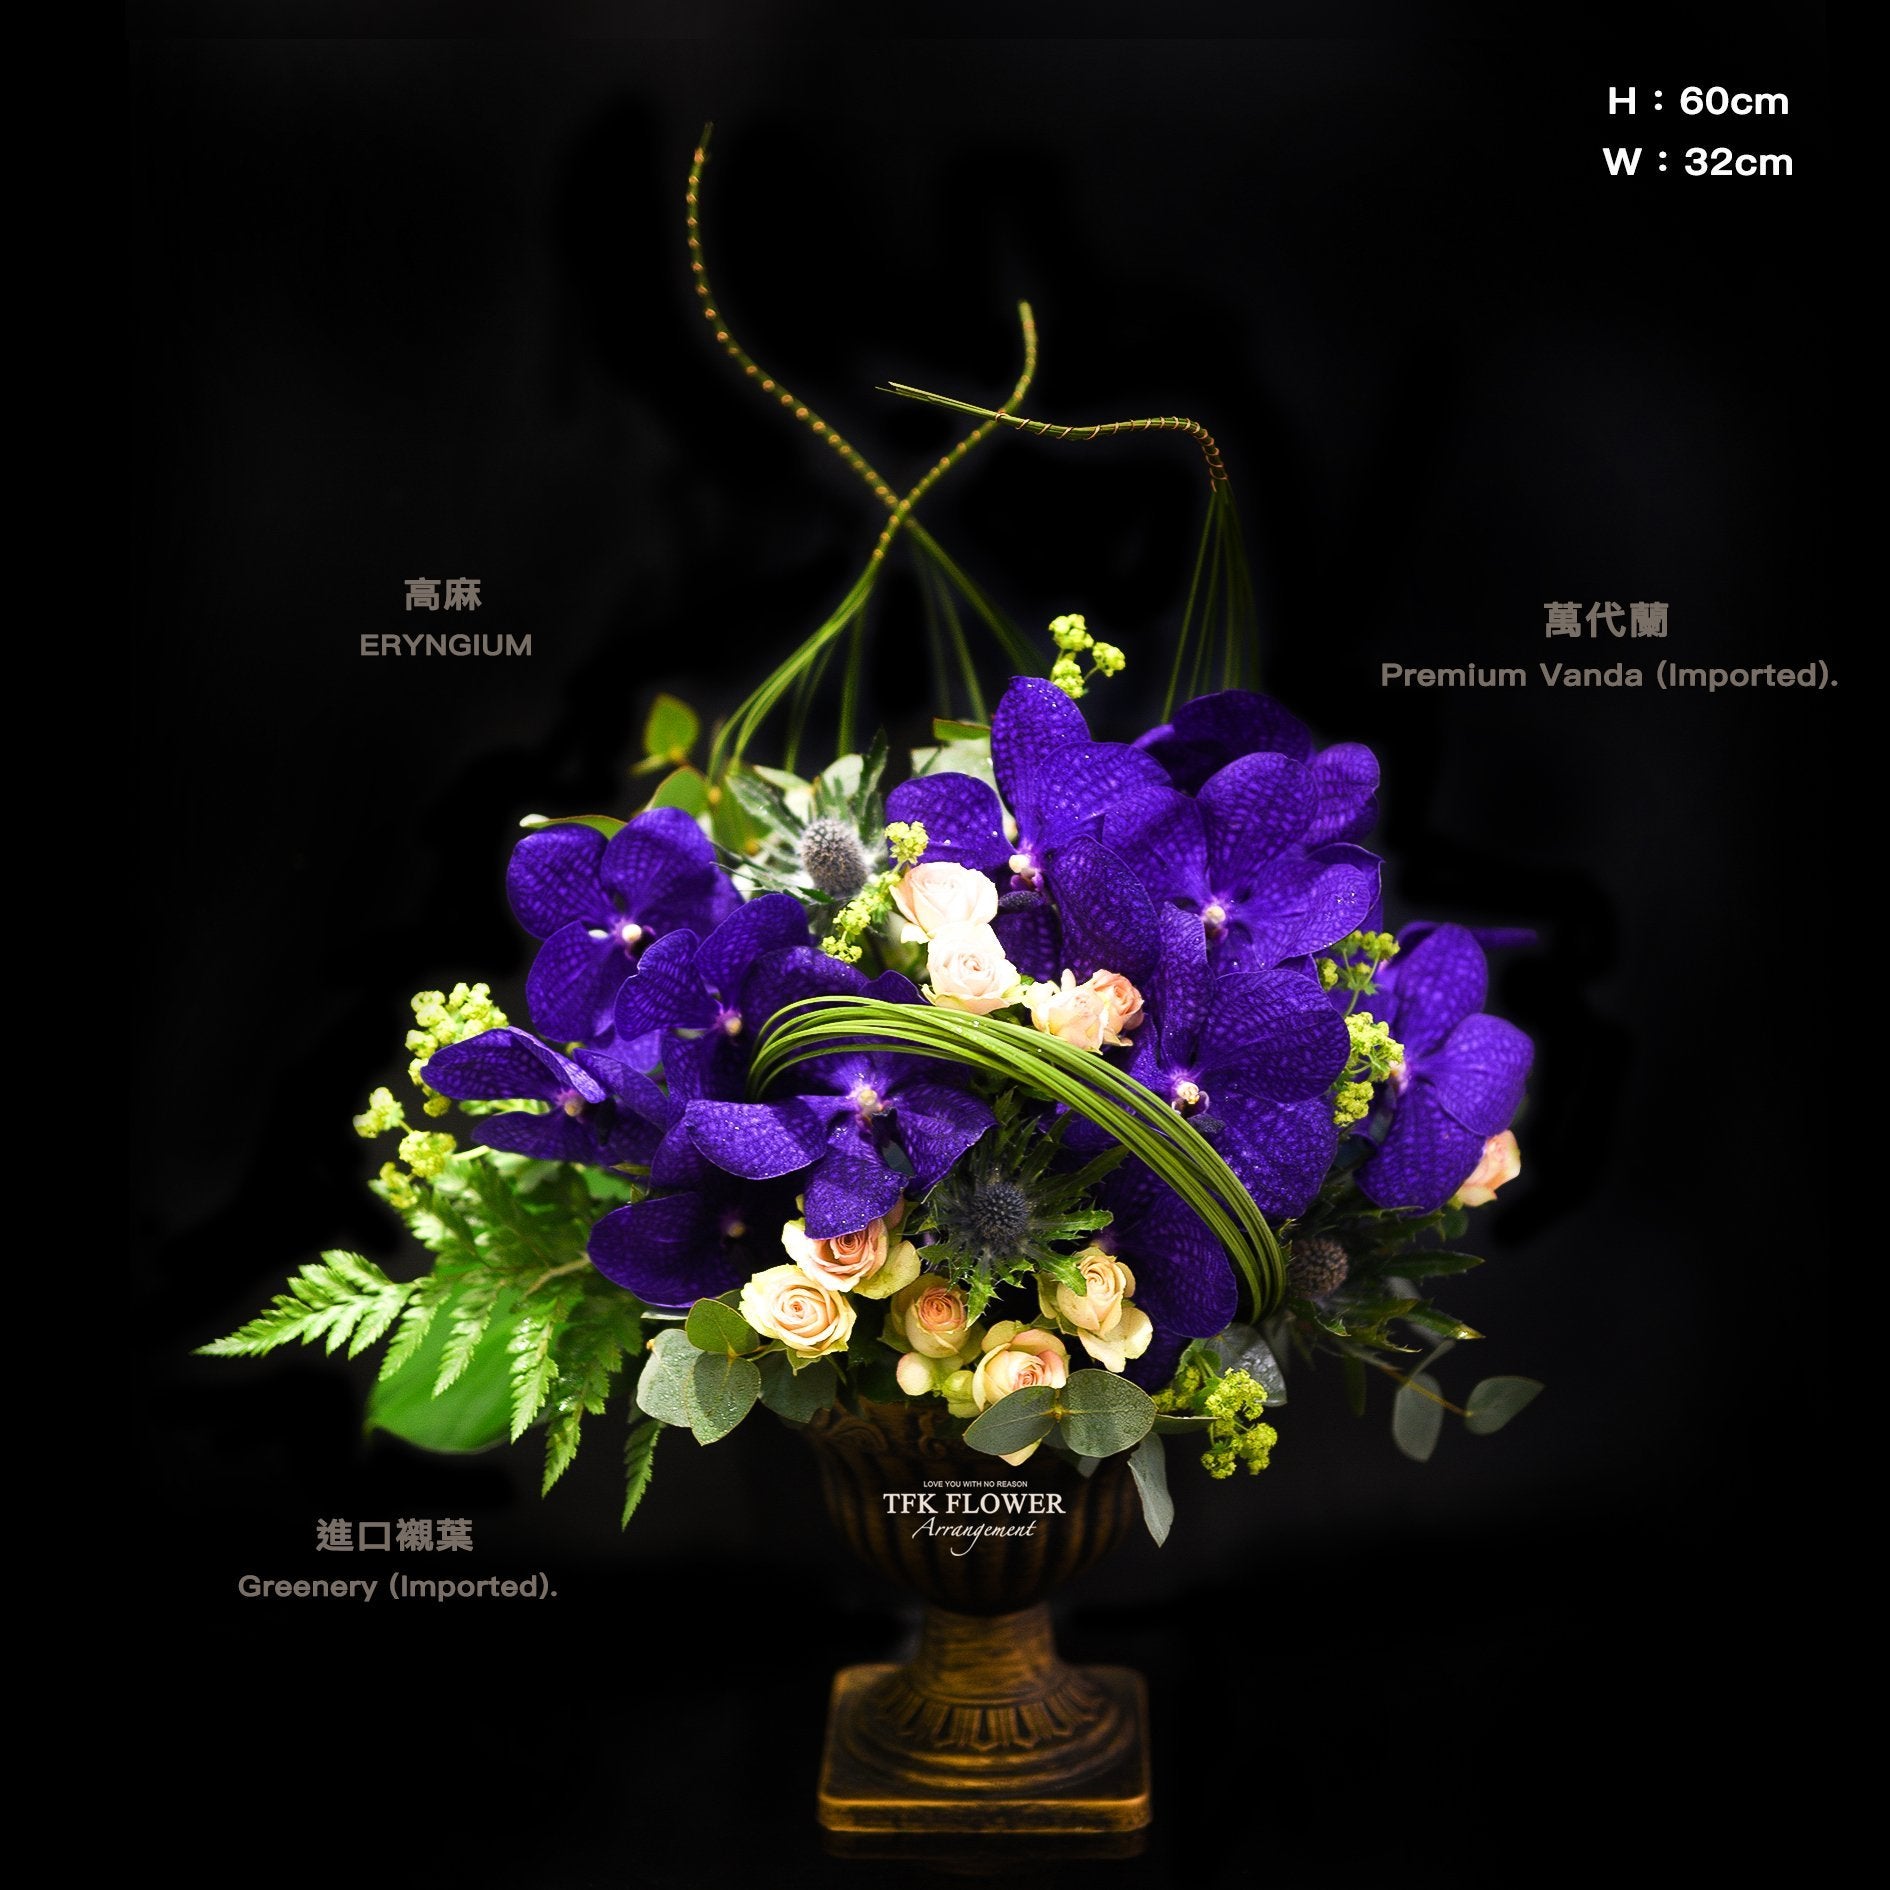 VANDA TABLE ARRANGEMENT - TFK Flower